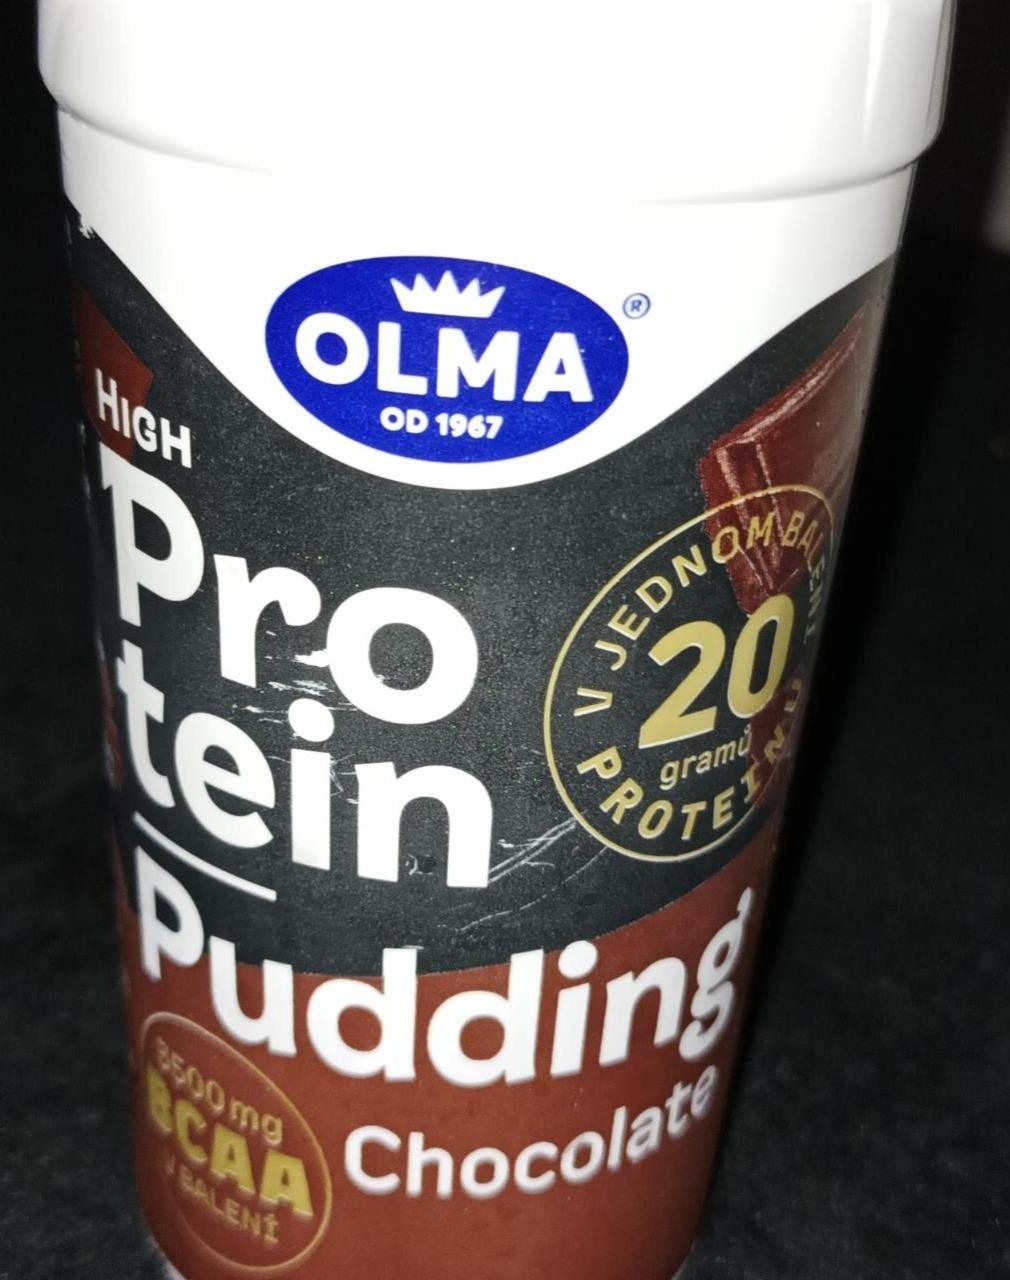 Képek - High protein pudding chocolate Olma